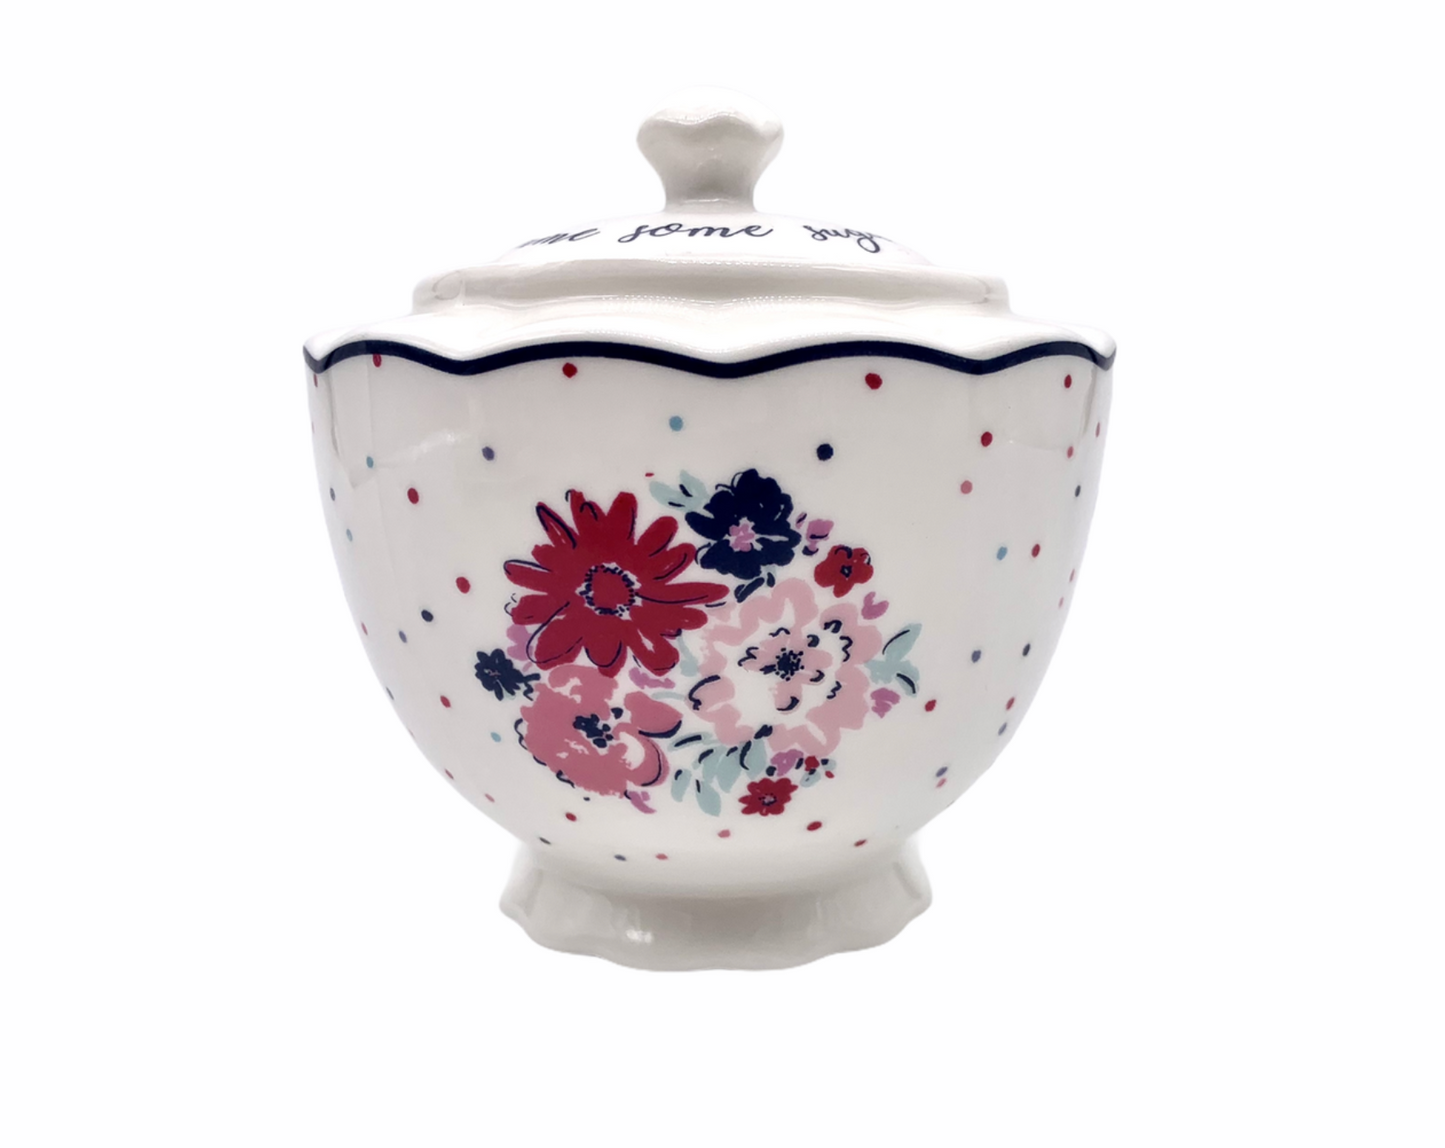 Ashley Thomas Porcelain Vintage Sugar Bowl